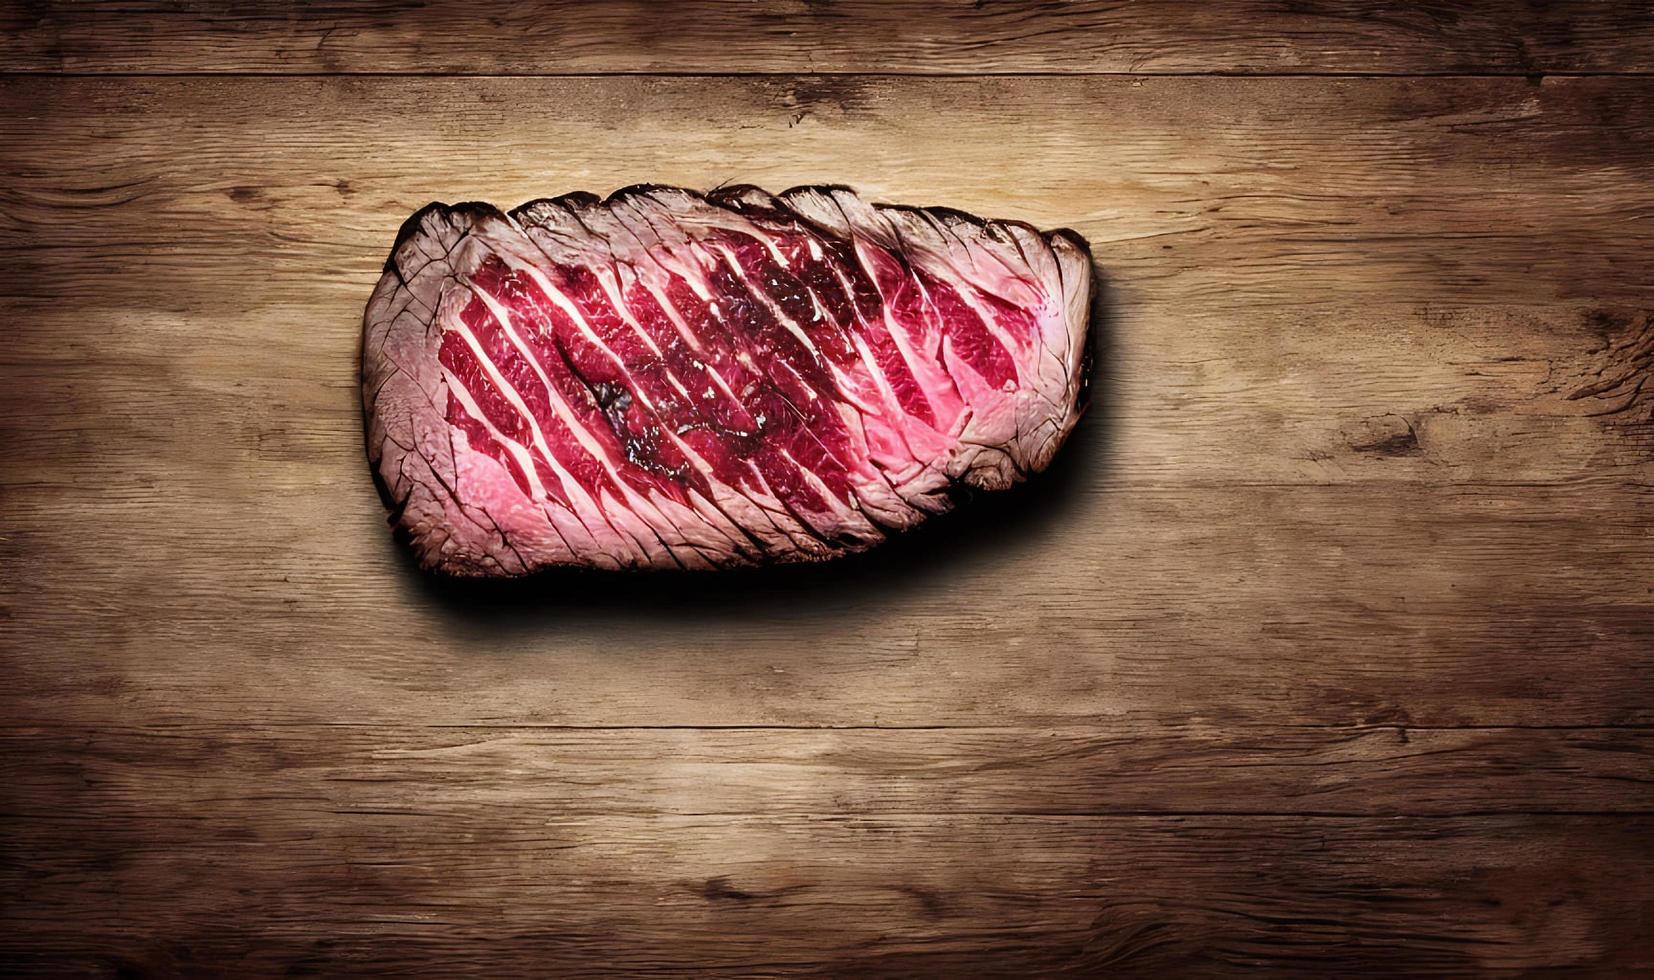 Steak. Gourmet fresh delicious juicy steak. Selected focus, in Poster format. photo